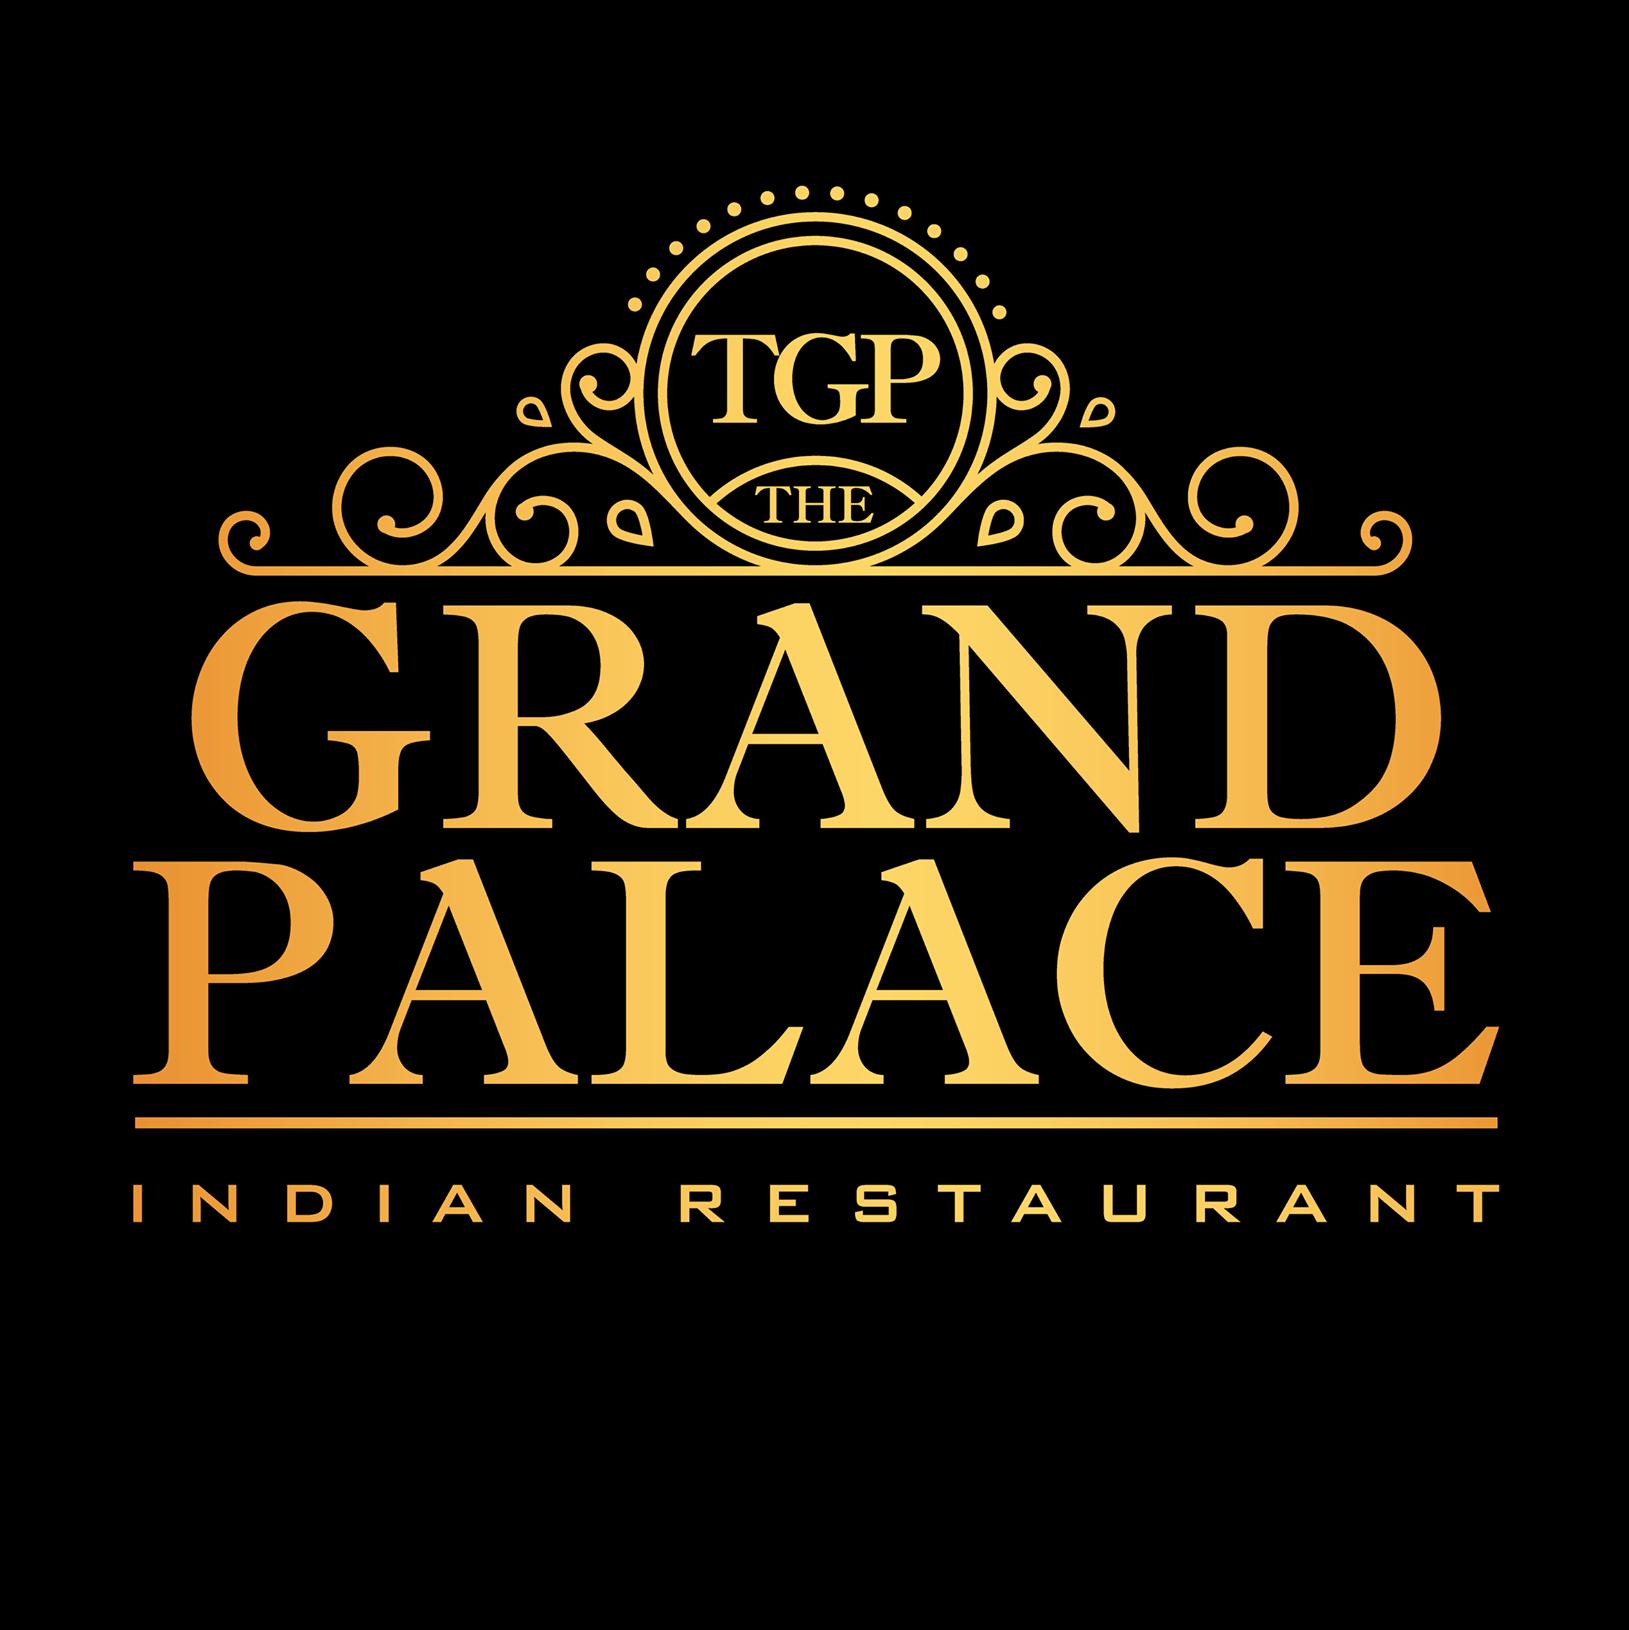 The Grand Palace Indian Restaurant Basement261 George St Sydney